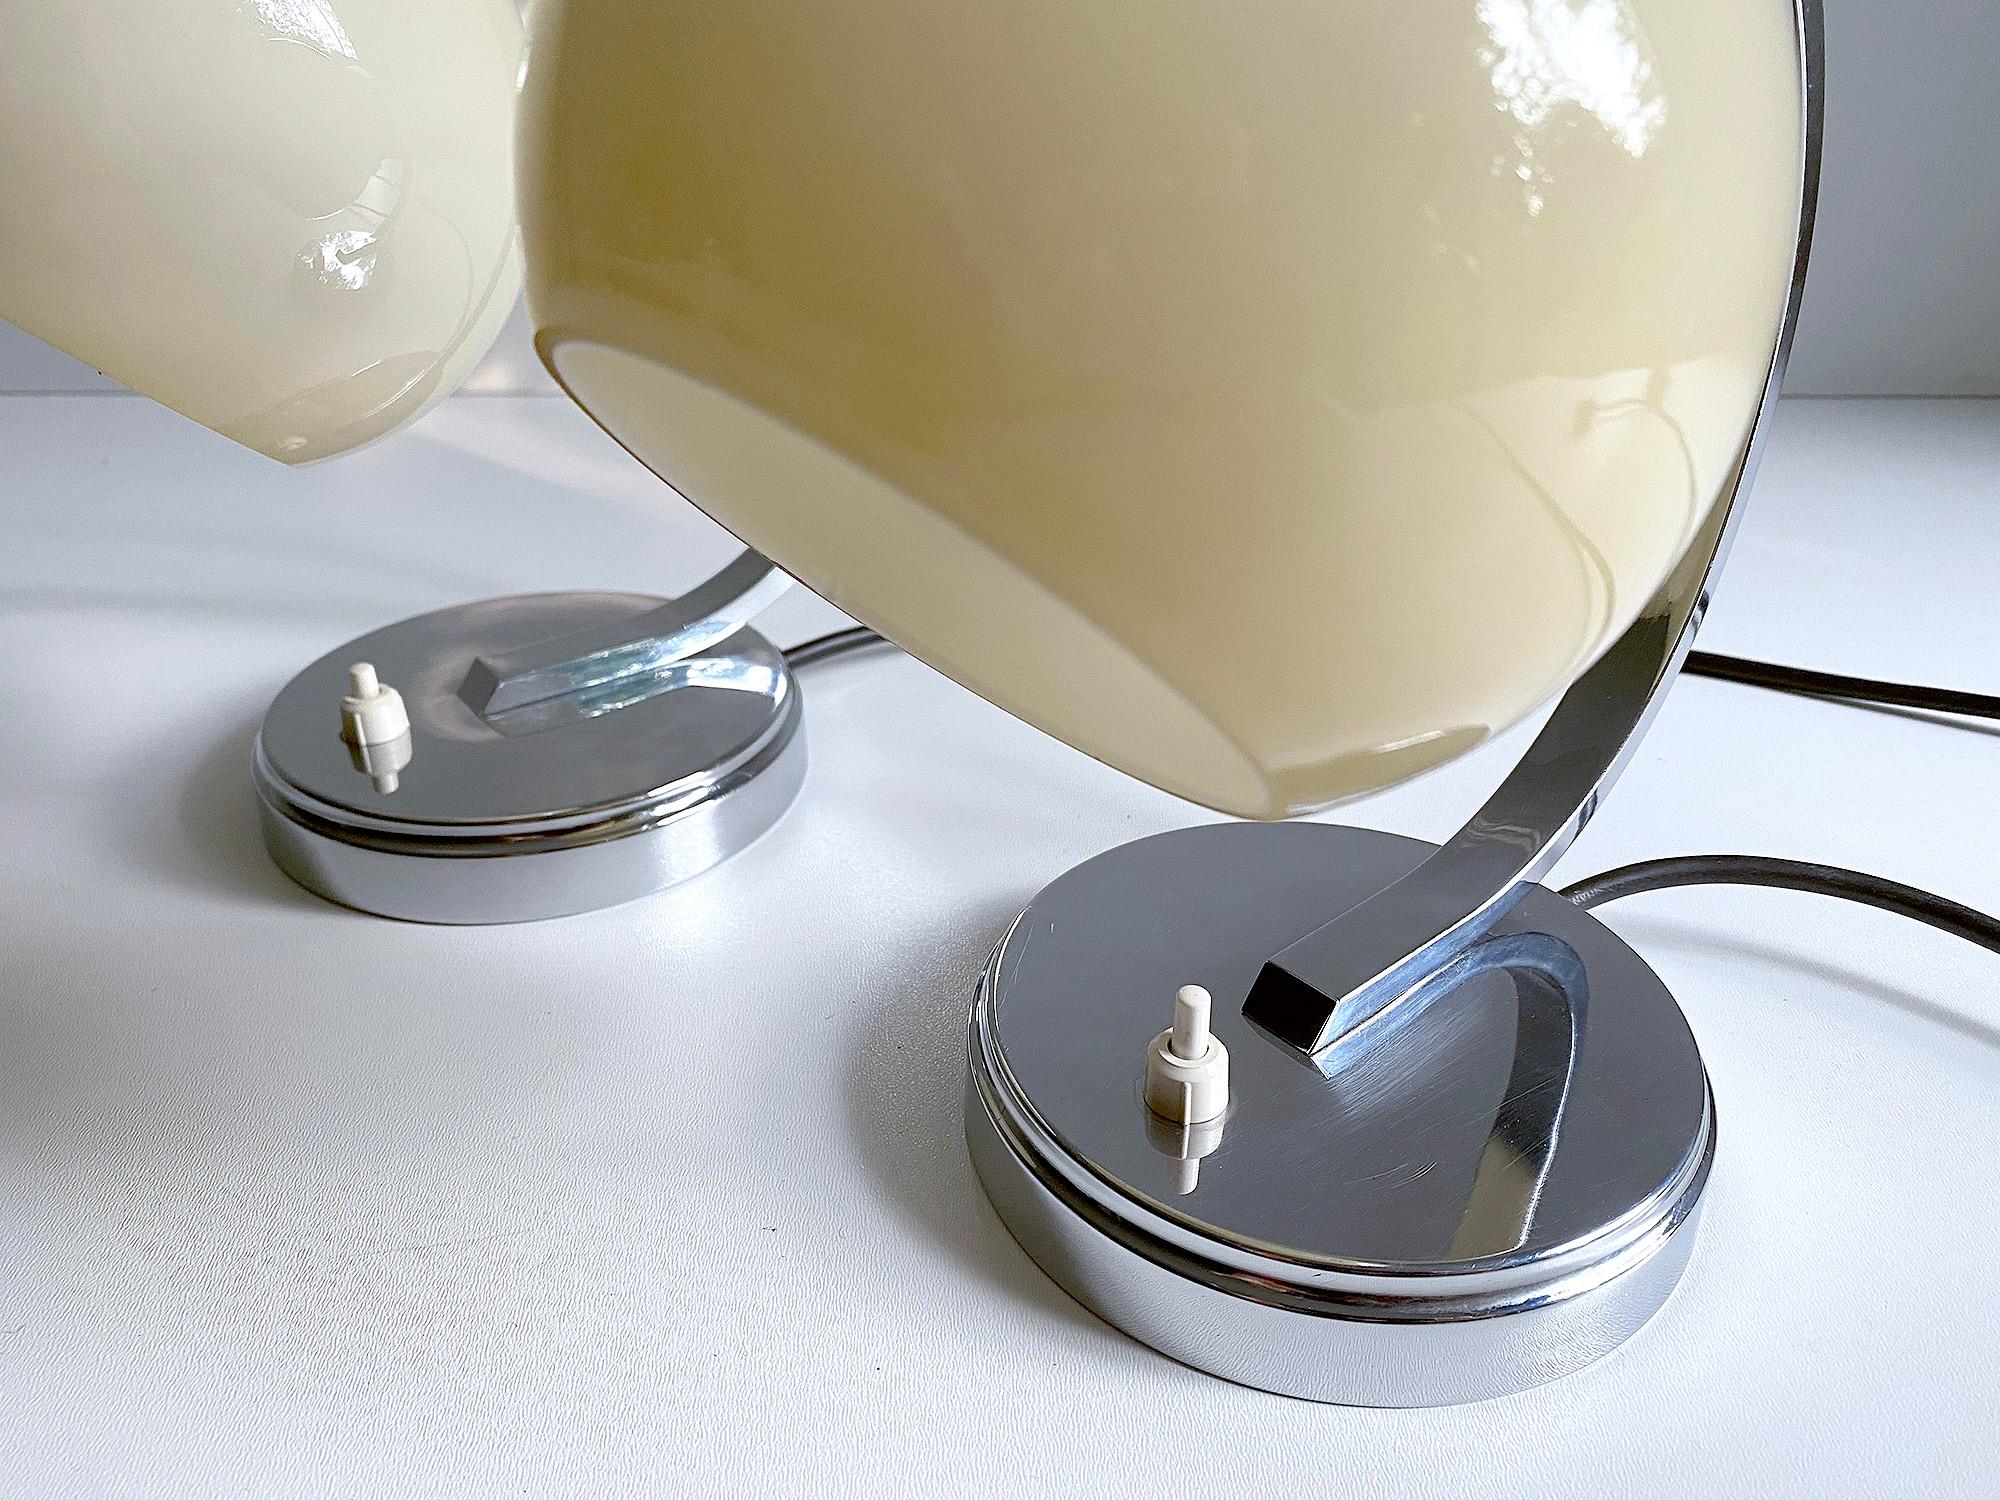  Pair of Art Deco Bauhaus Table Lamps Lights, Chrome Opaline  Glass, 1930s  For Sale 2